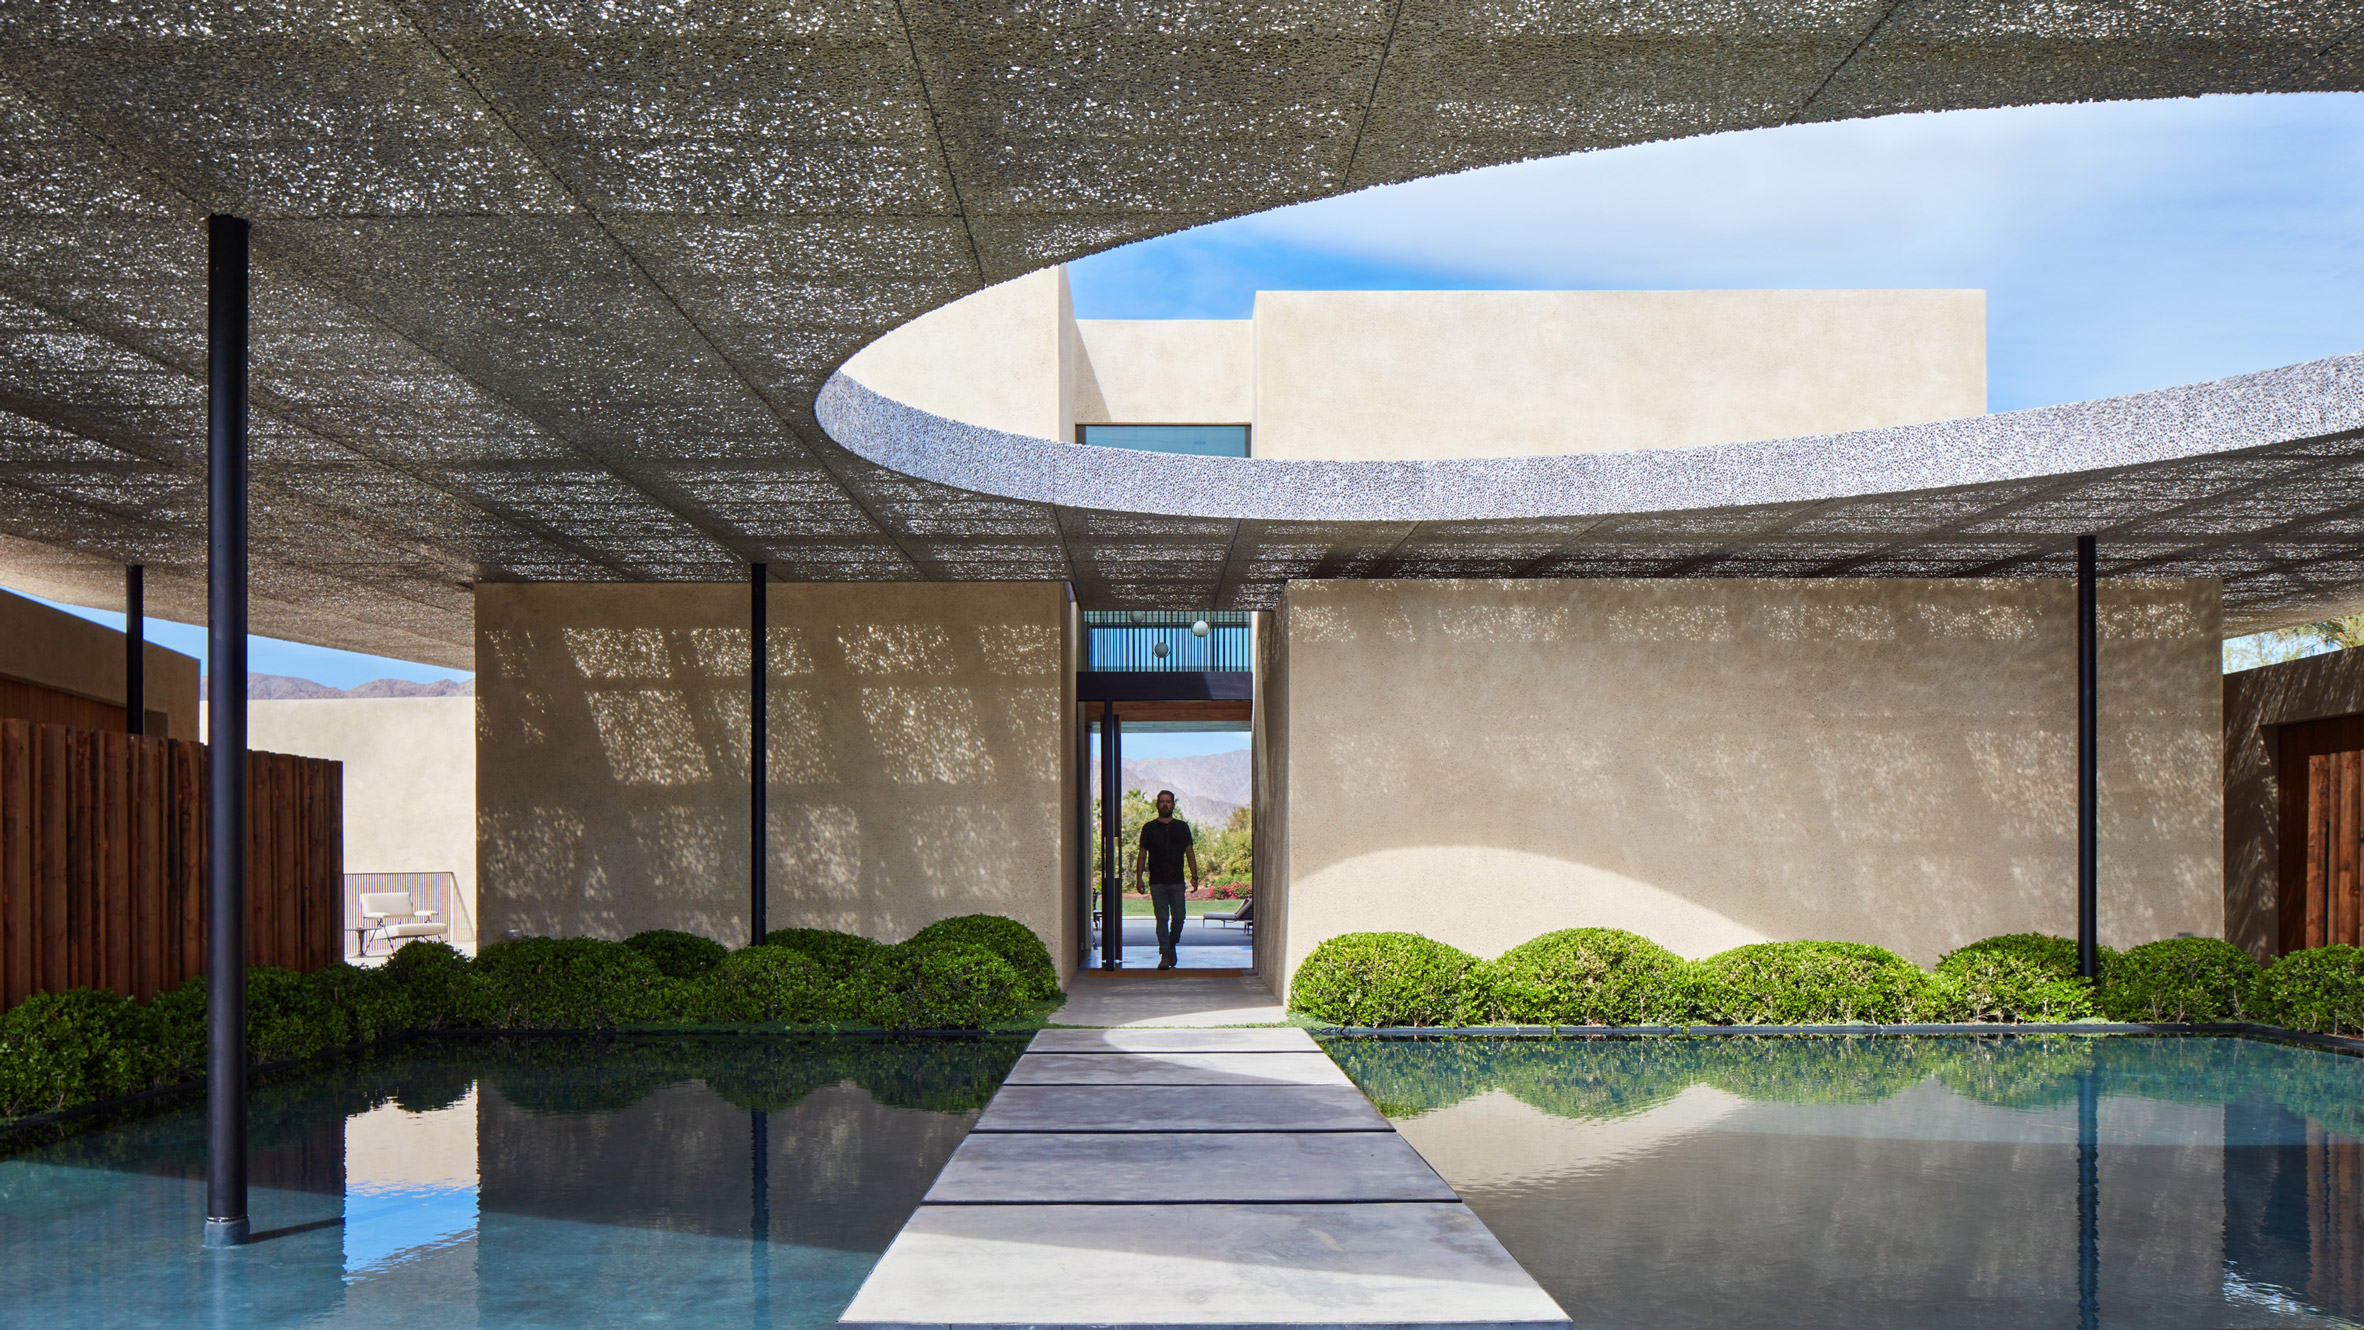 Mesh canopy shades California desert retreat by Kovac Design Studio